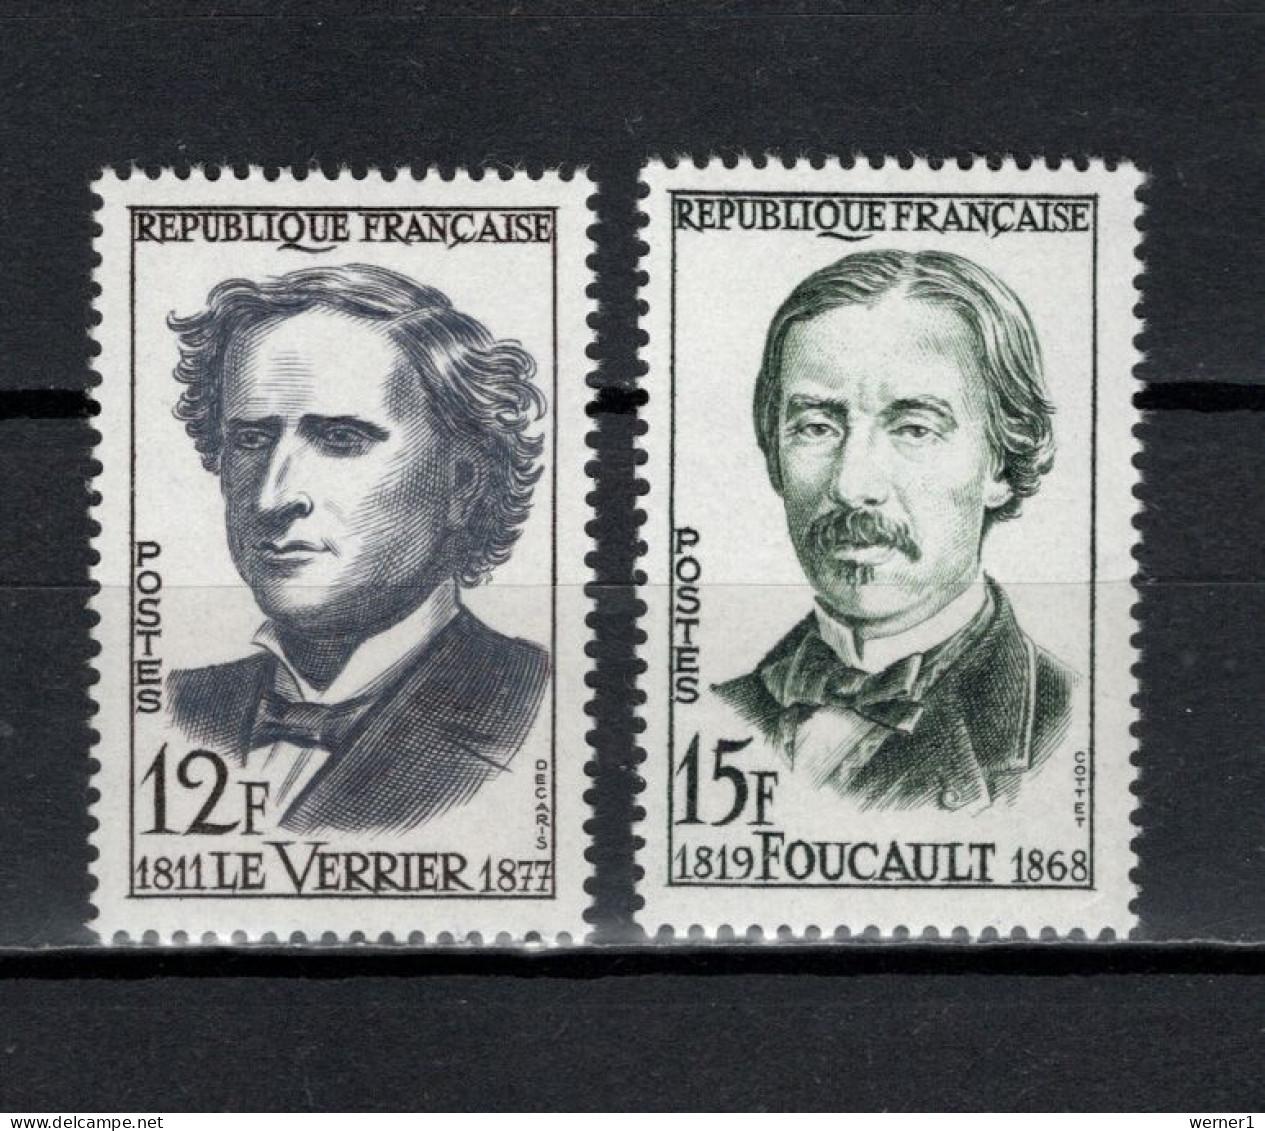 France 1958 Space, Le Verrier, Foucault 2 Stamps MNH - Europa